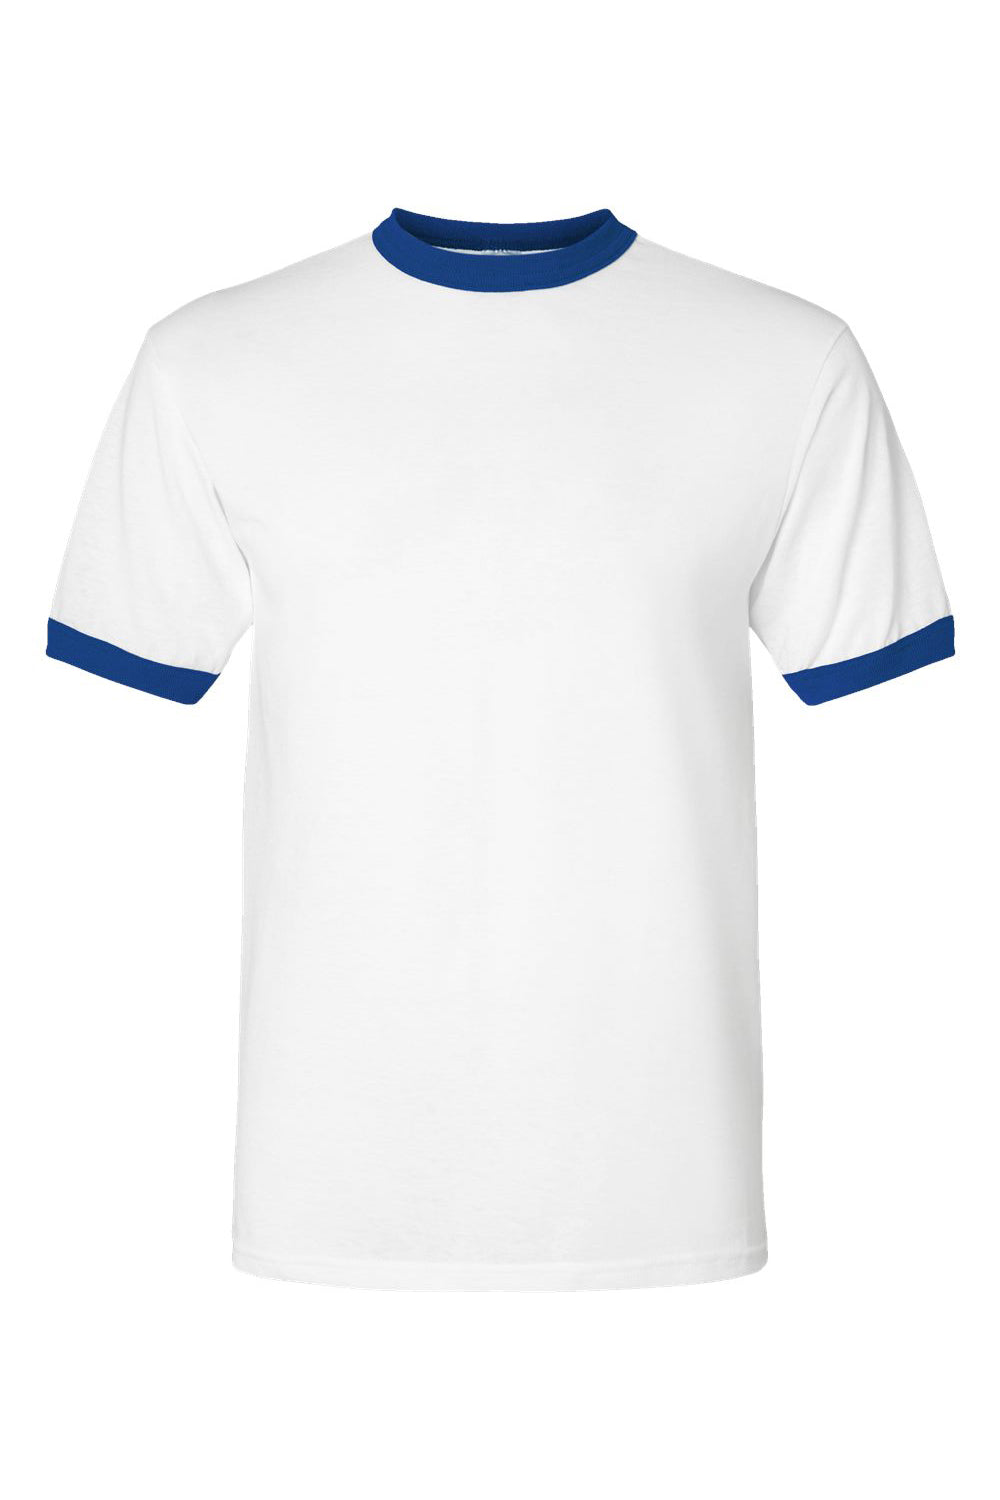 Augusta Sportswear 710 Mens Ringer Short Sleeve Crewneck T-Shirt White/Royal Flat Front